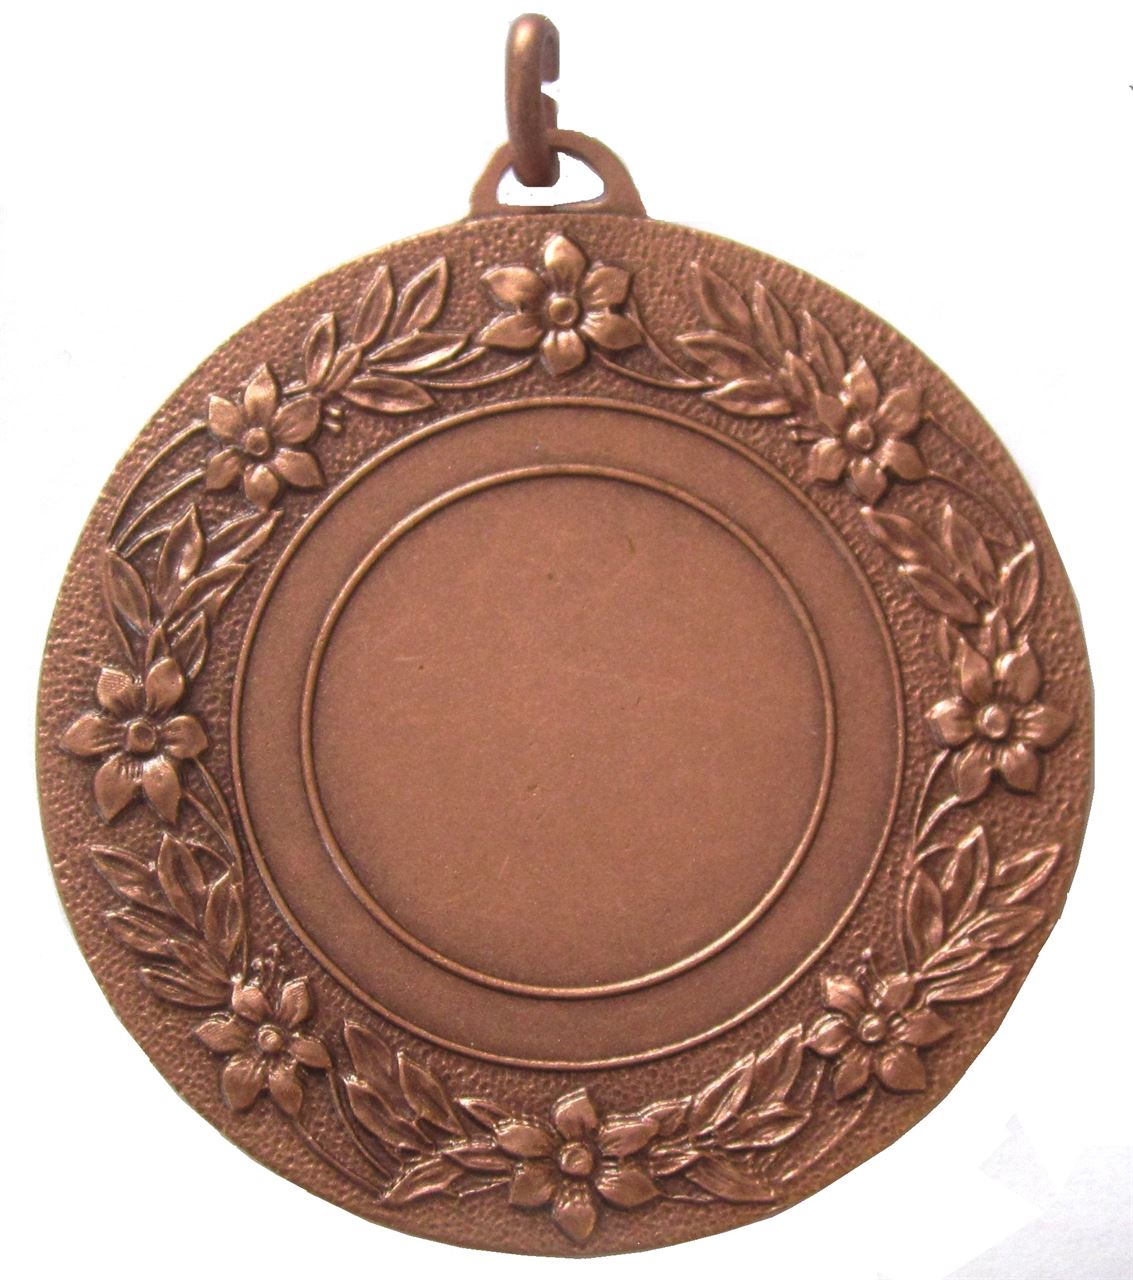 Copper Quality Floral Medal (size: 50mm) - 5809E